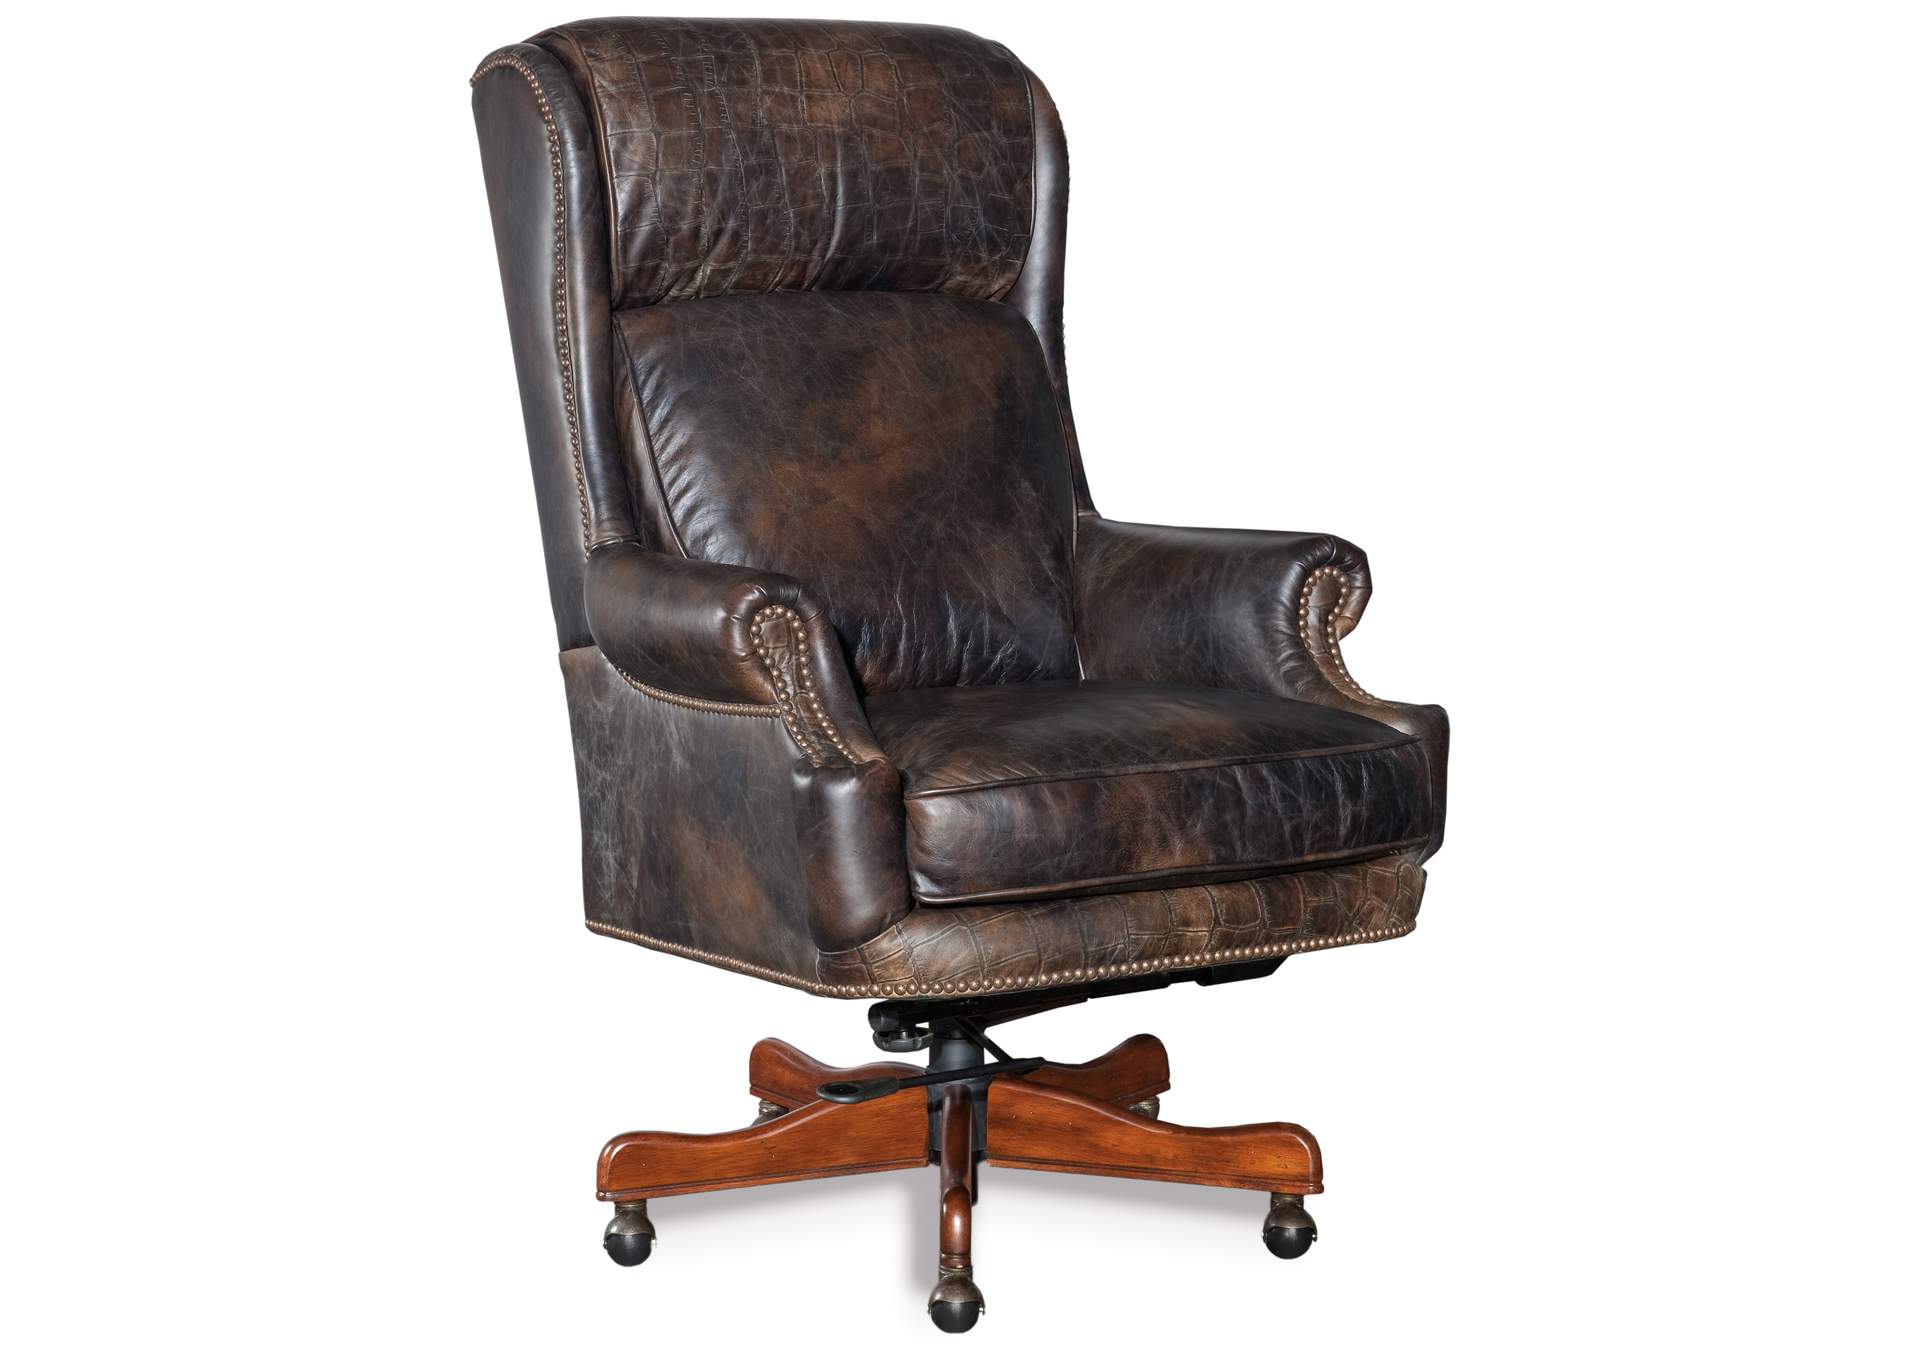 Tucker Executive Swivel Tilt Chair,Hooker Furniture